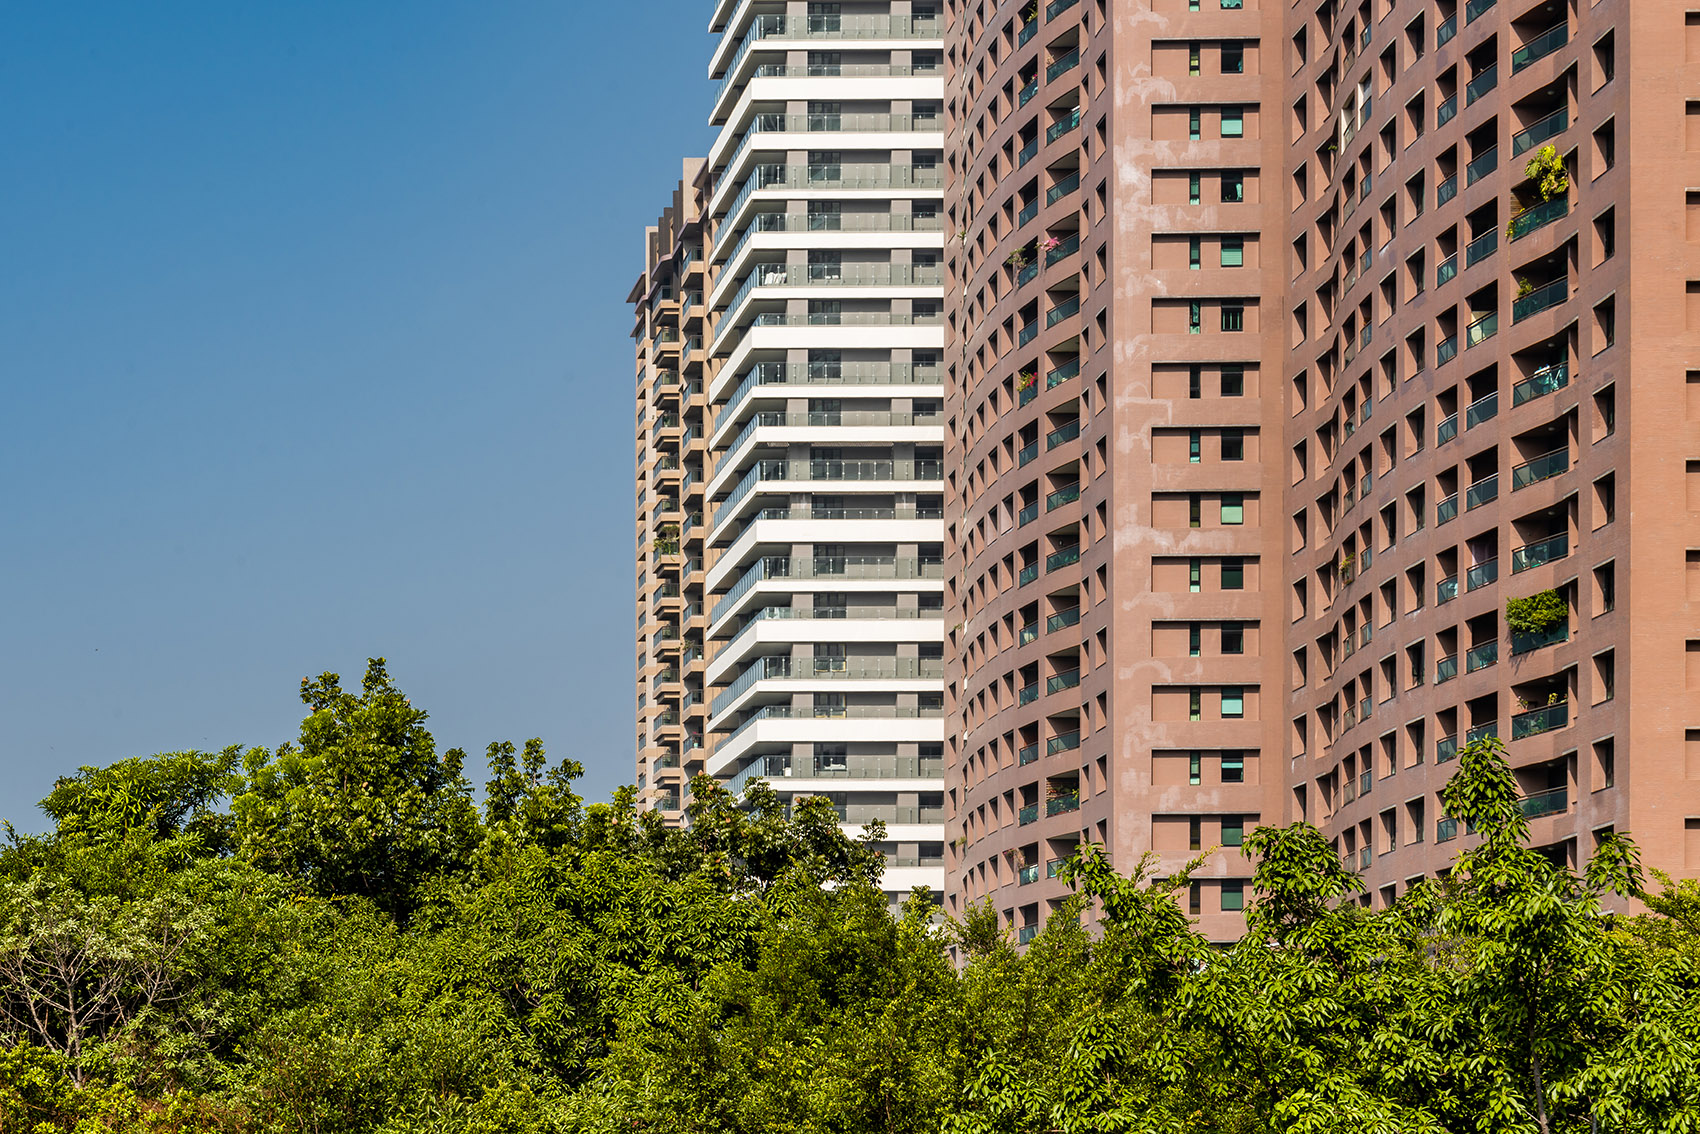 One More住宅楼，台湾/城市环境中的自然生活-8